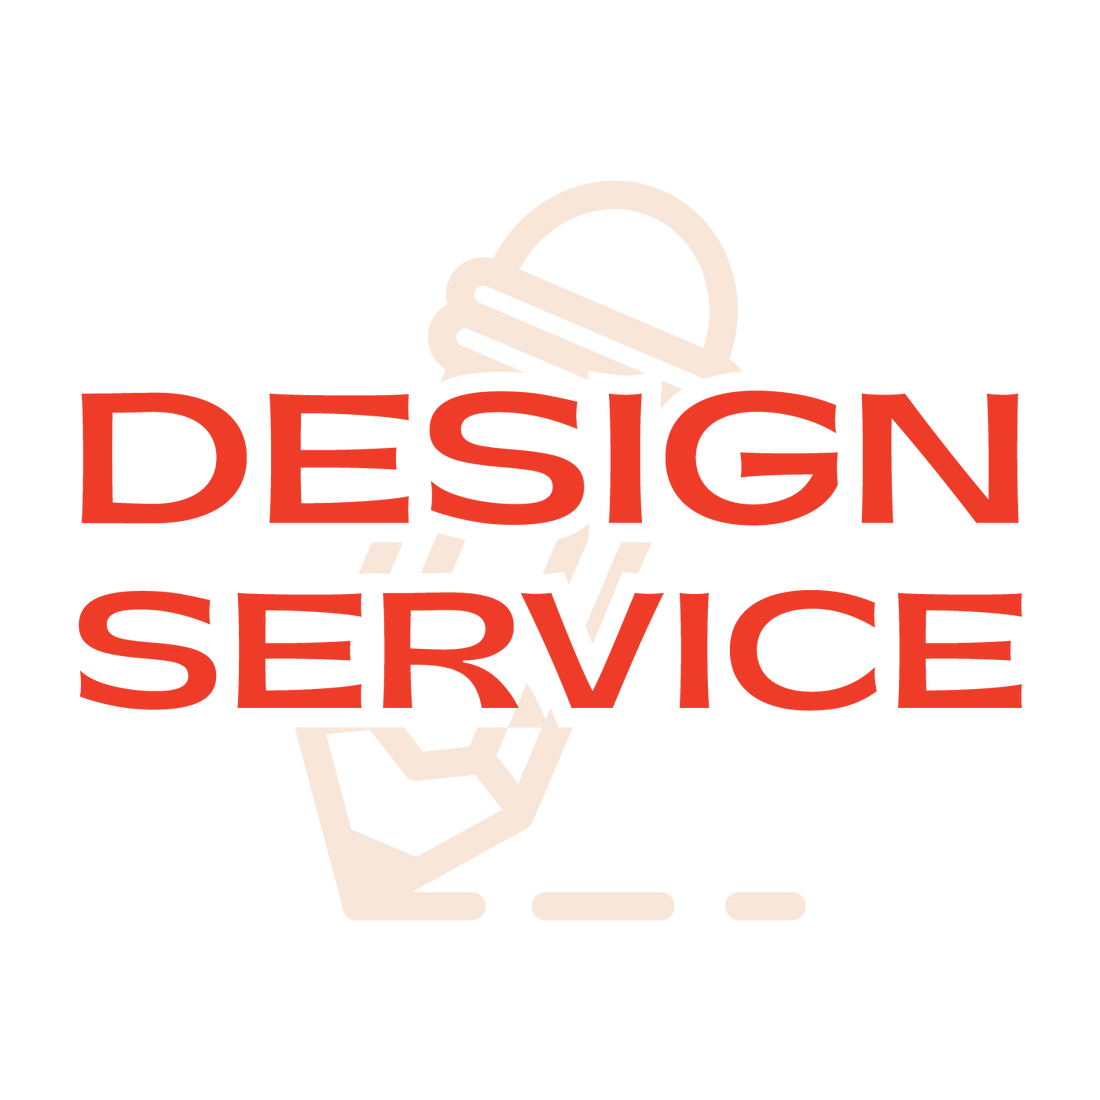 Design Service Fee